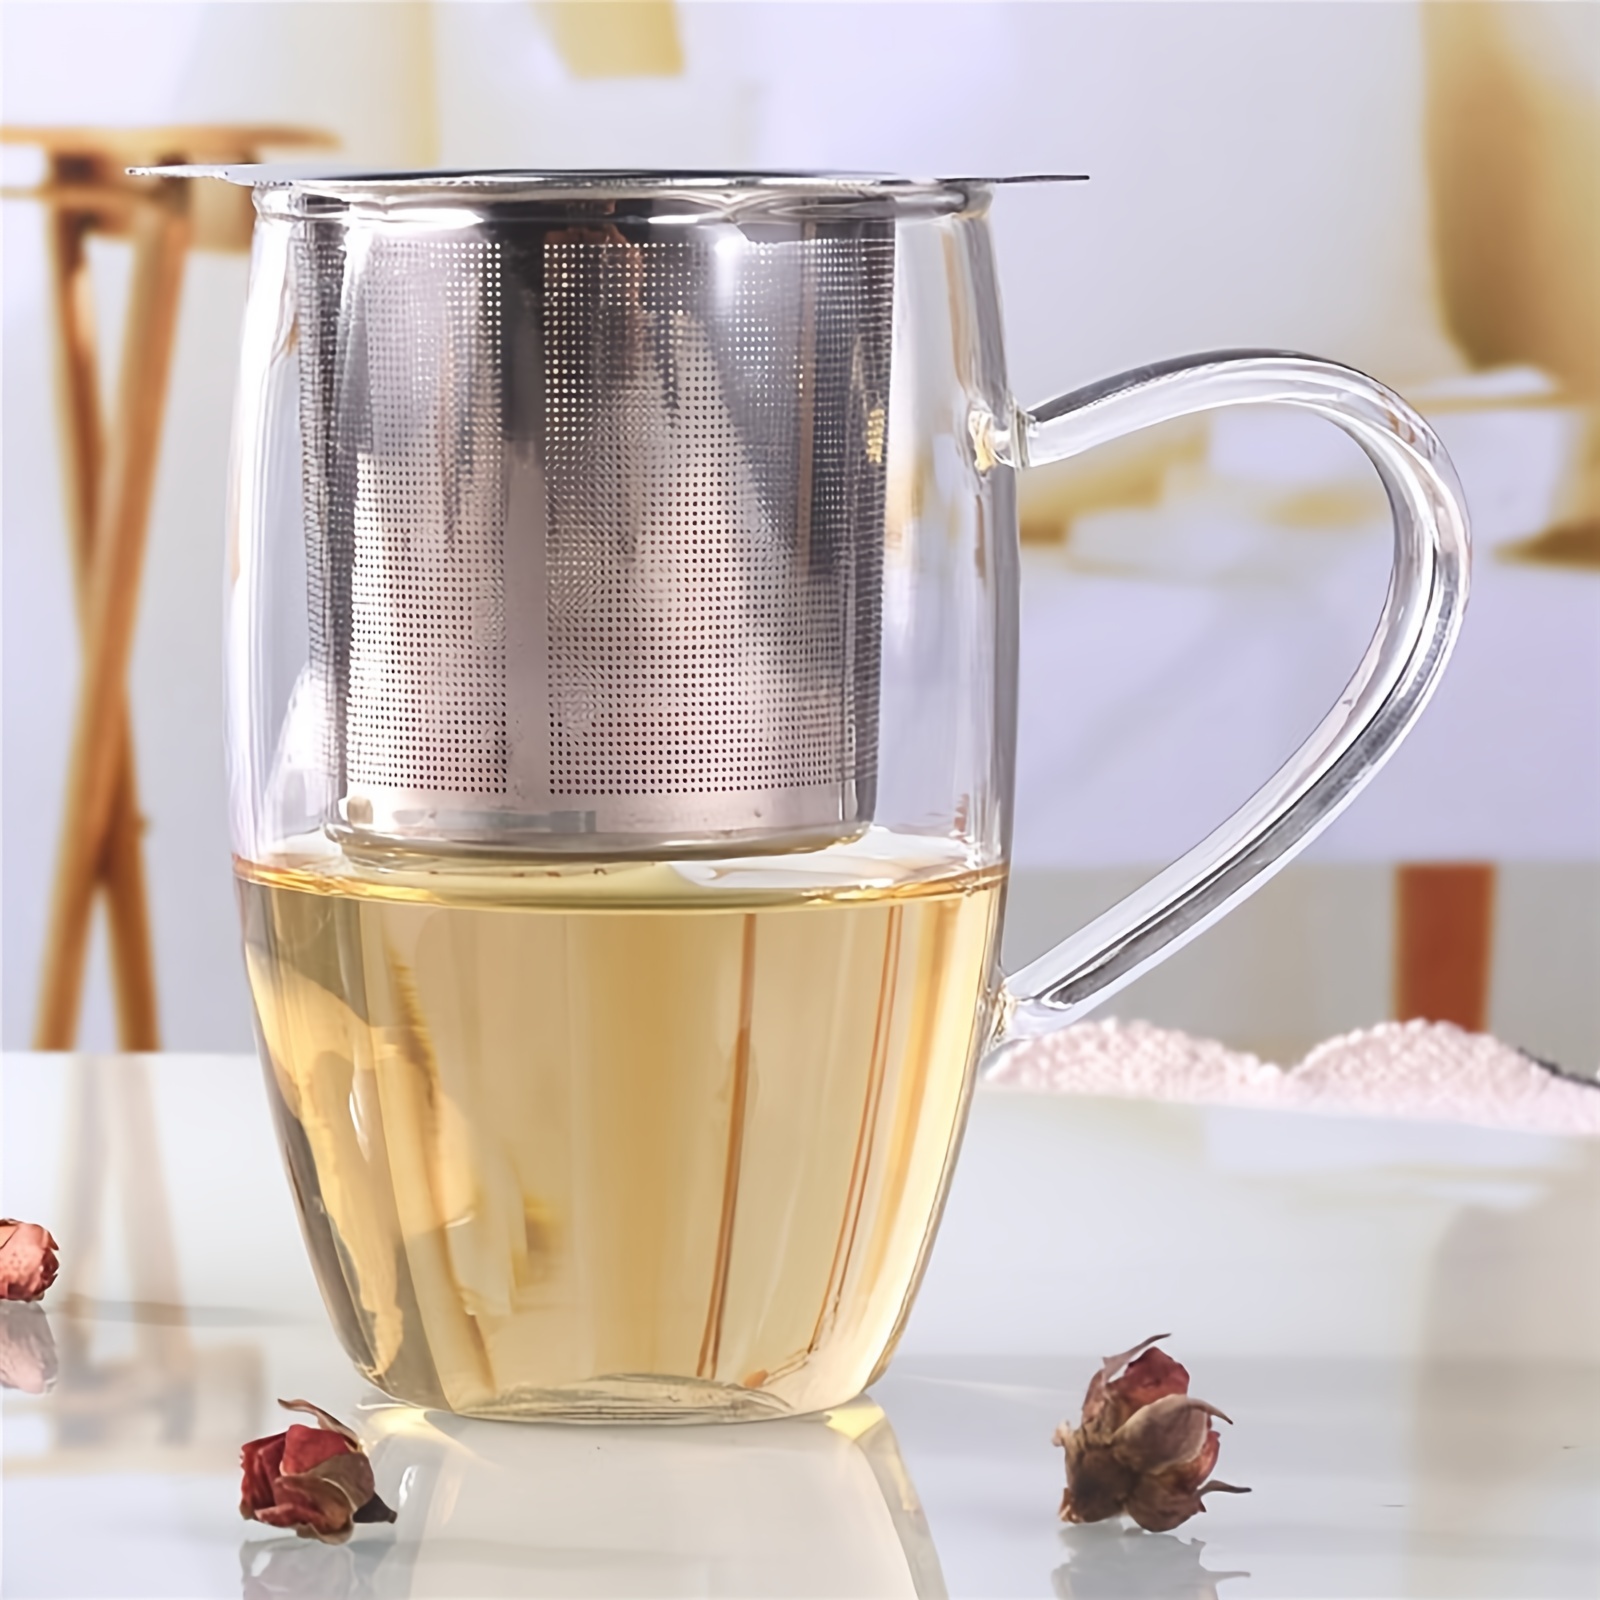 Infusore tè - ARKTeK durevole acciaio inossidabile 304 filtro per tè con  Catena per tè in foglie, spezie e condimenti (2 pezzi) : : Casa e  cucina